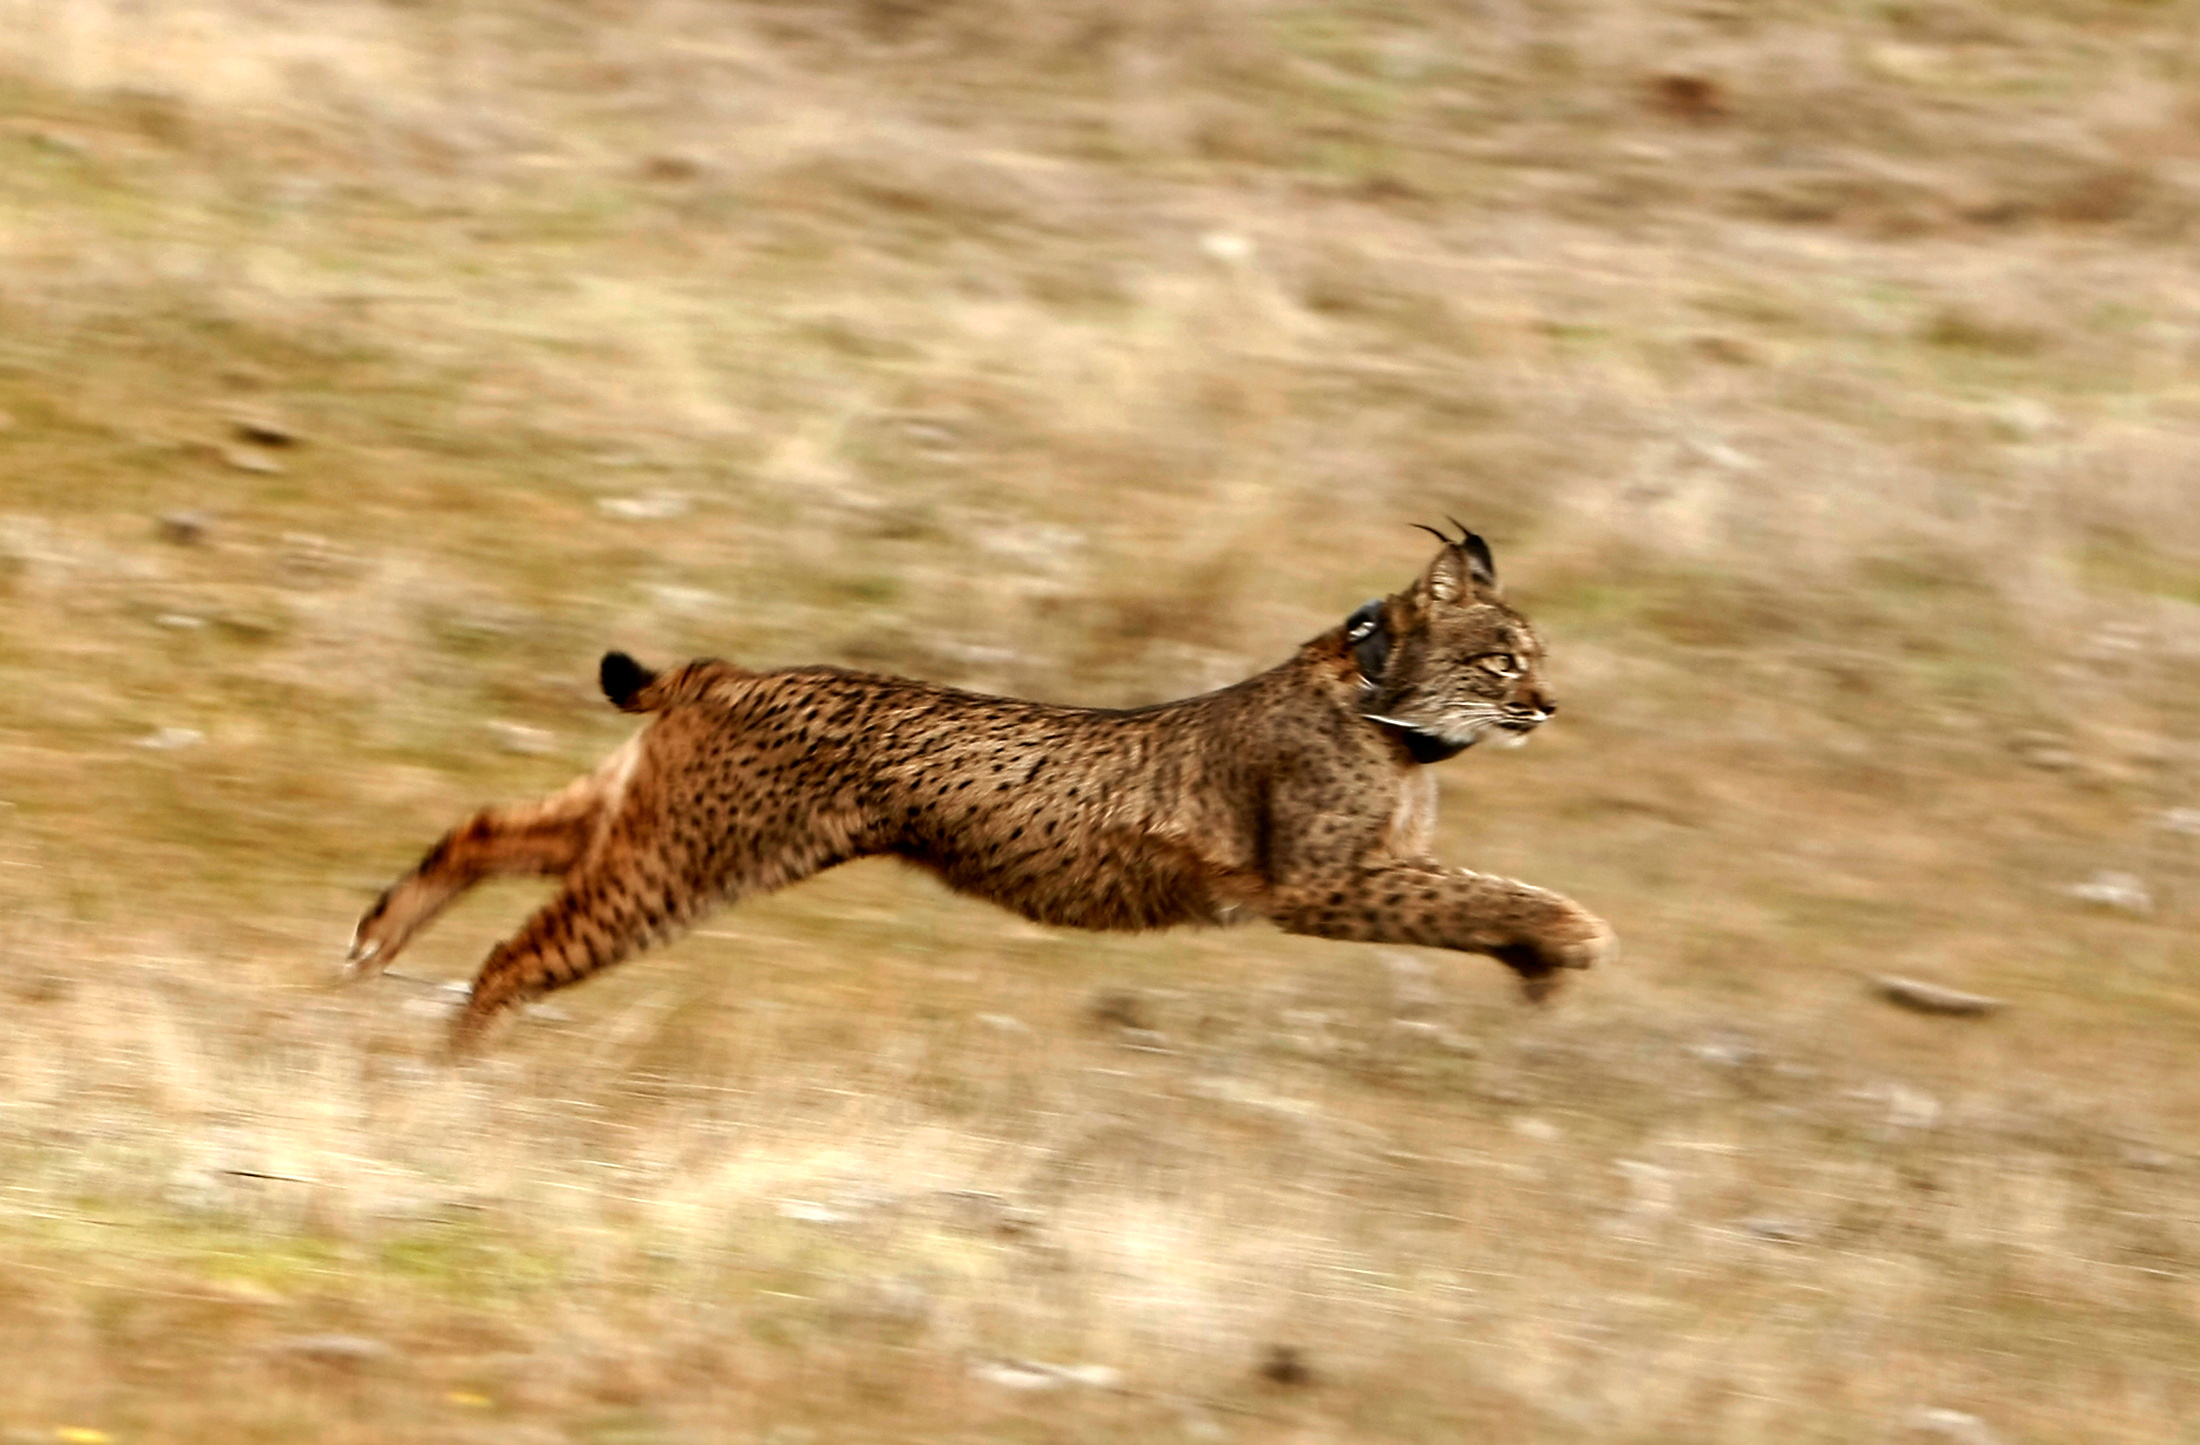 An Iberian lynx runs after being released in Villafranca de Cordoba